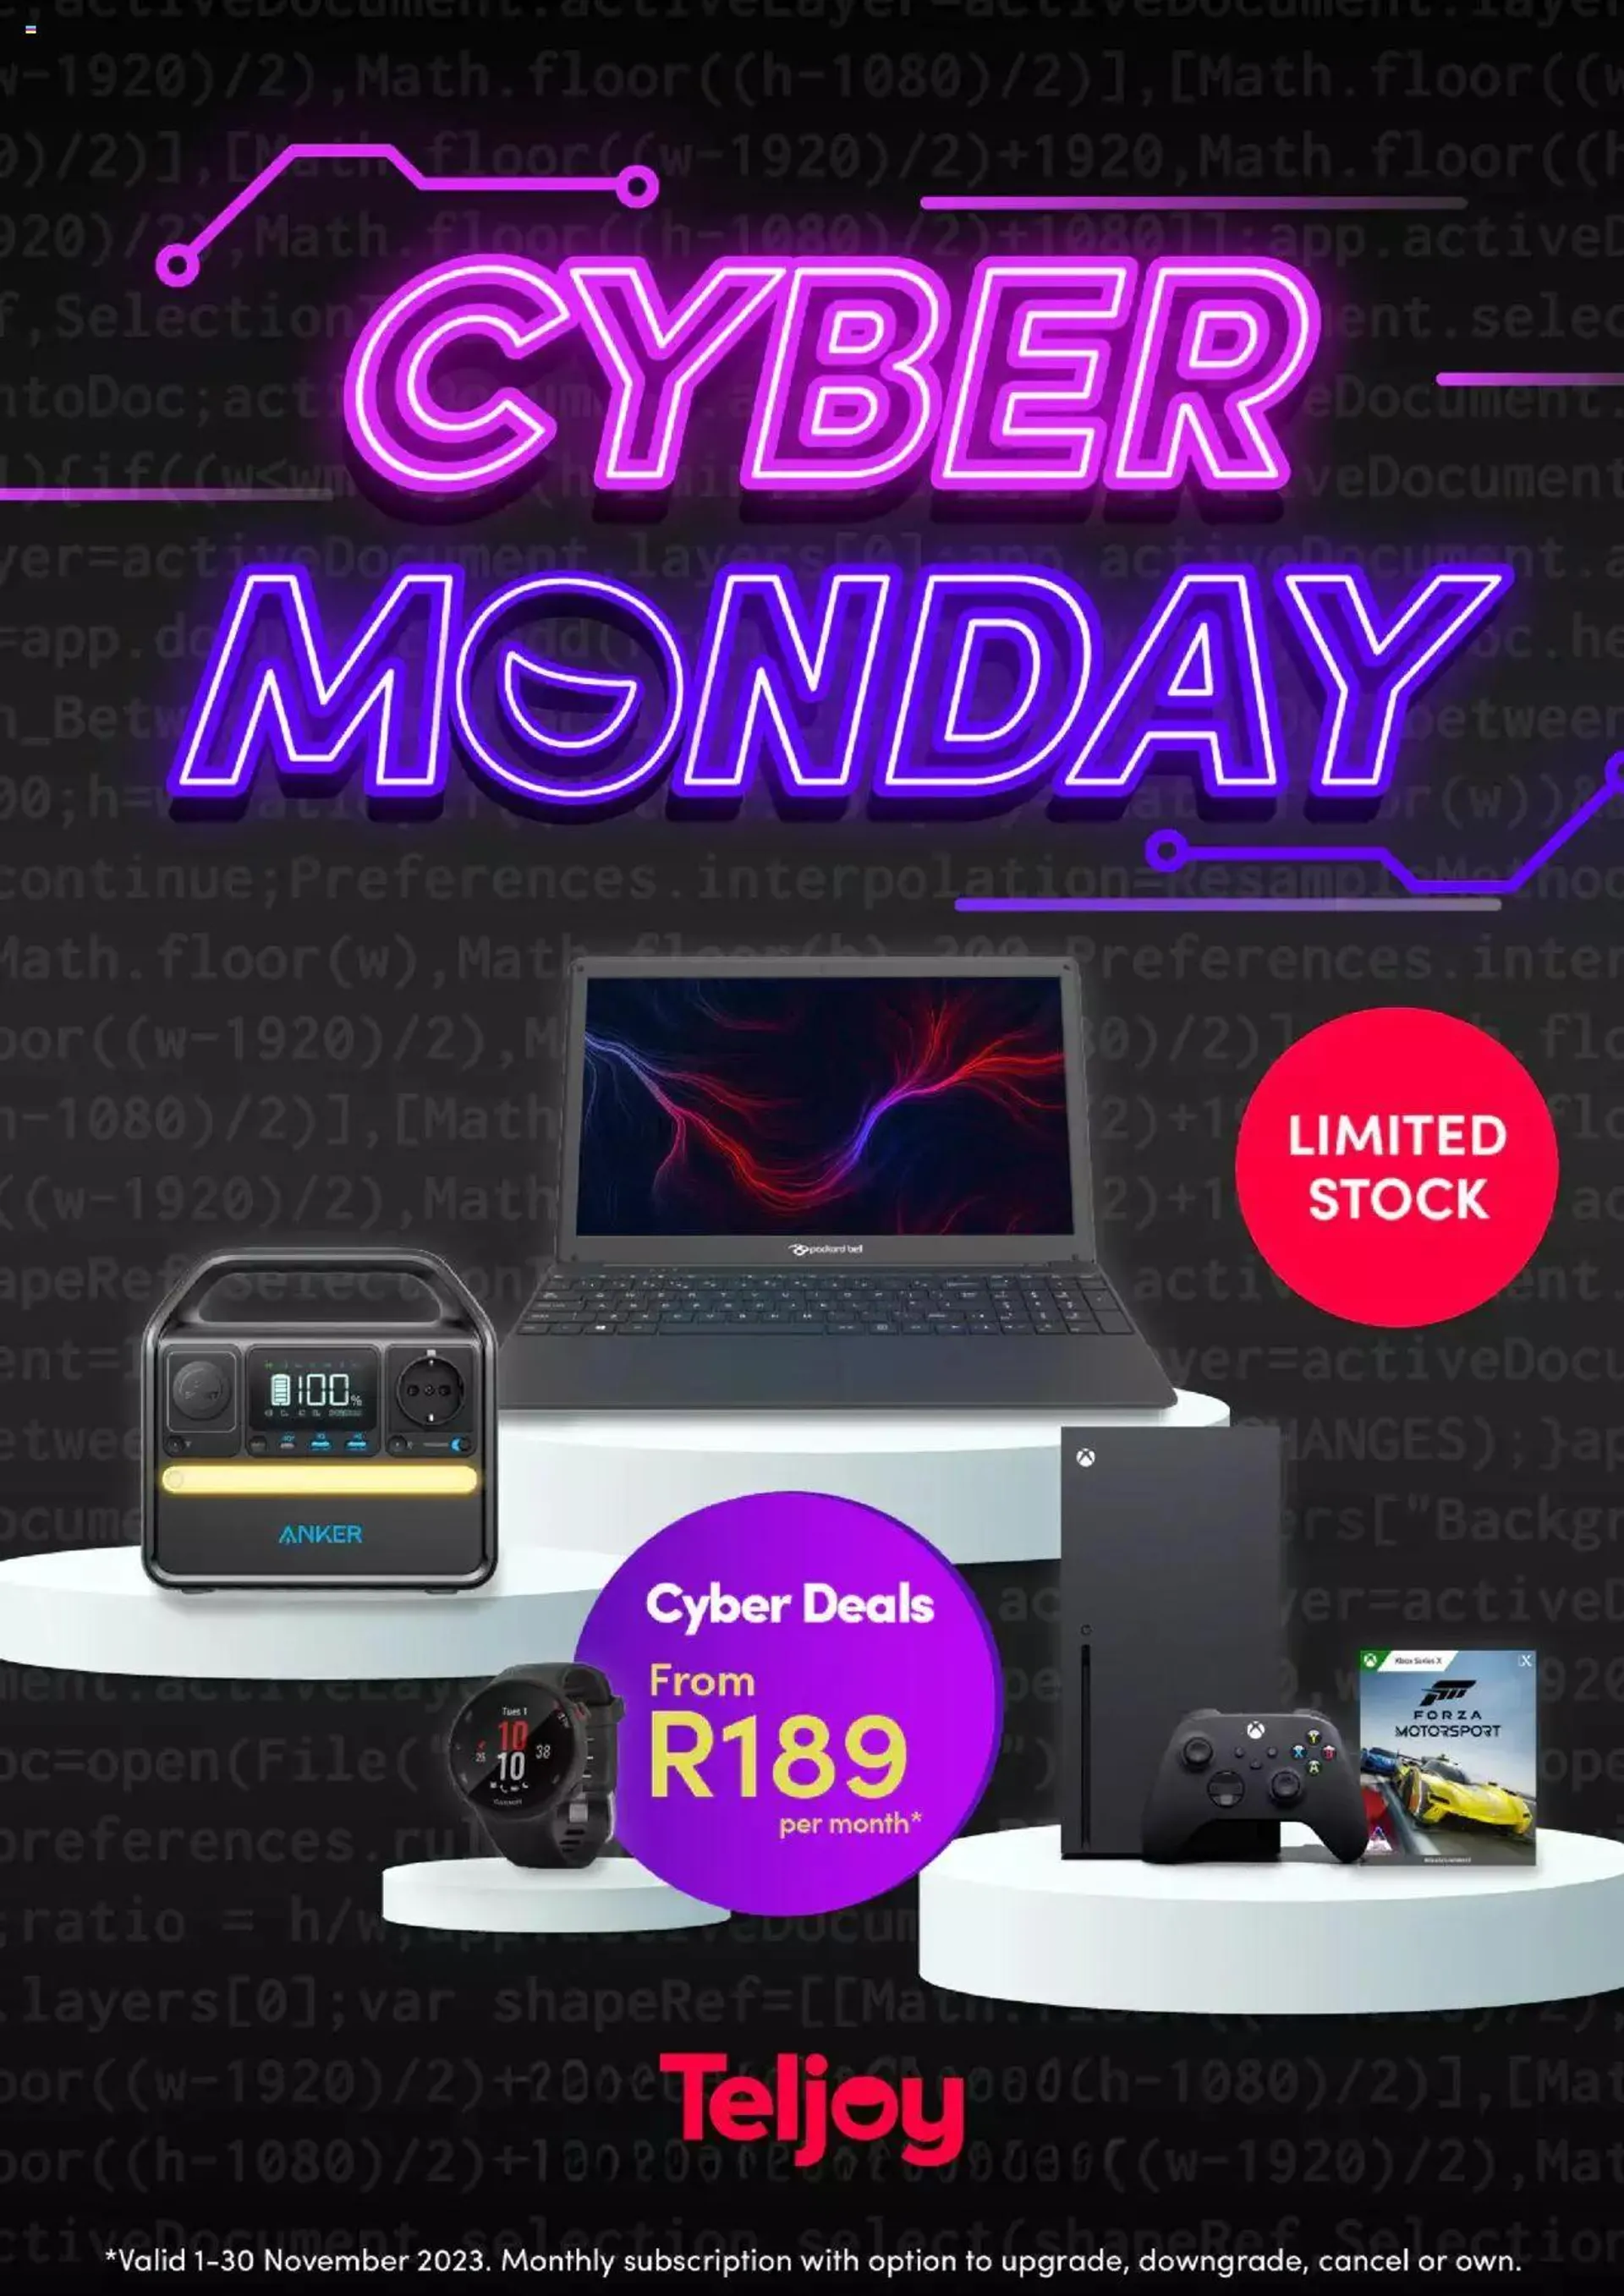 Teljoy - Cyber Monday